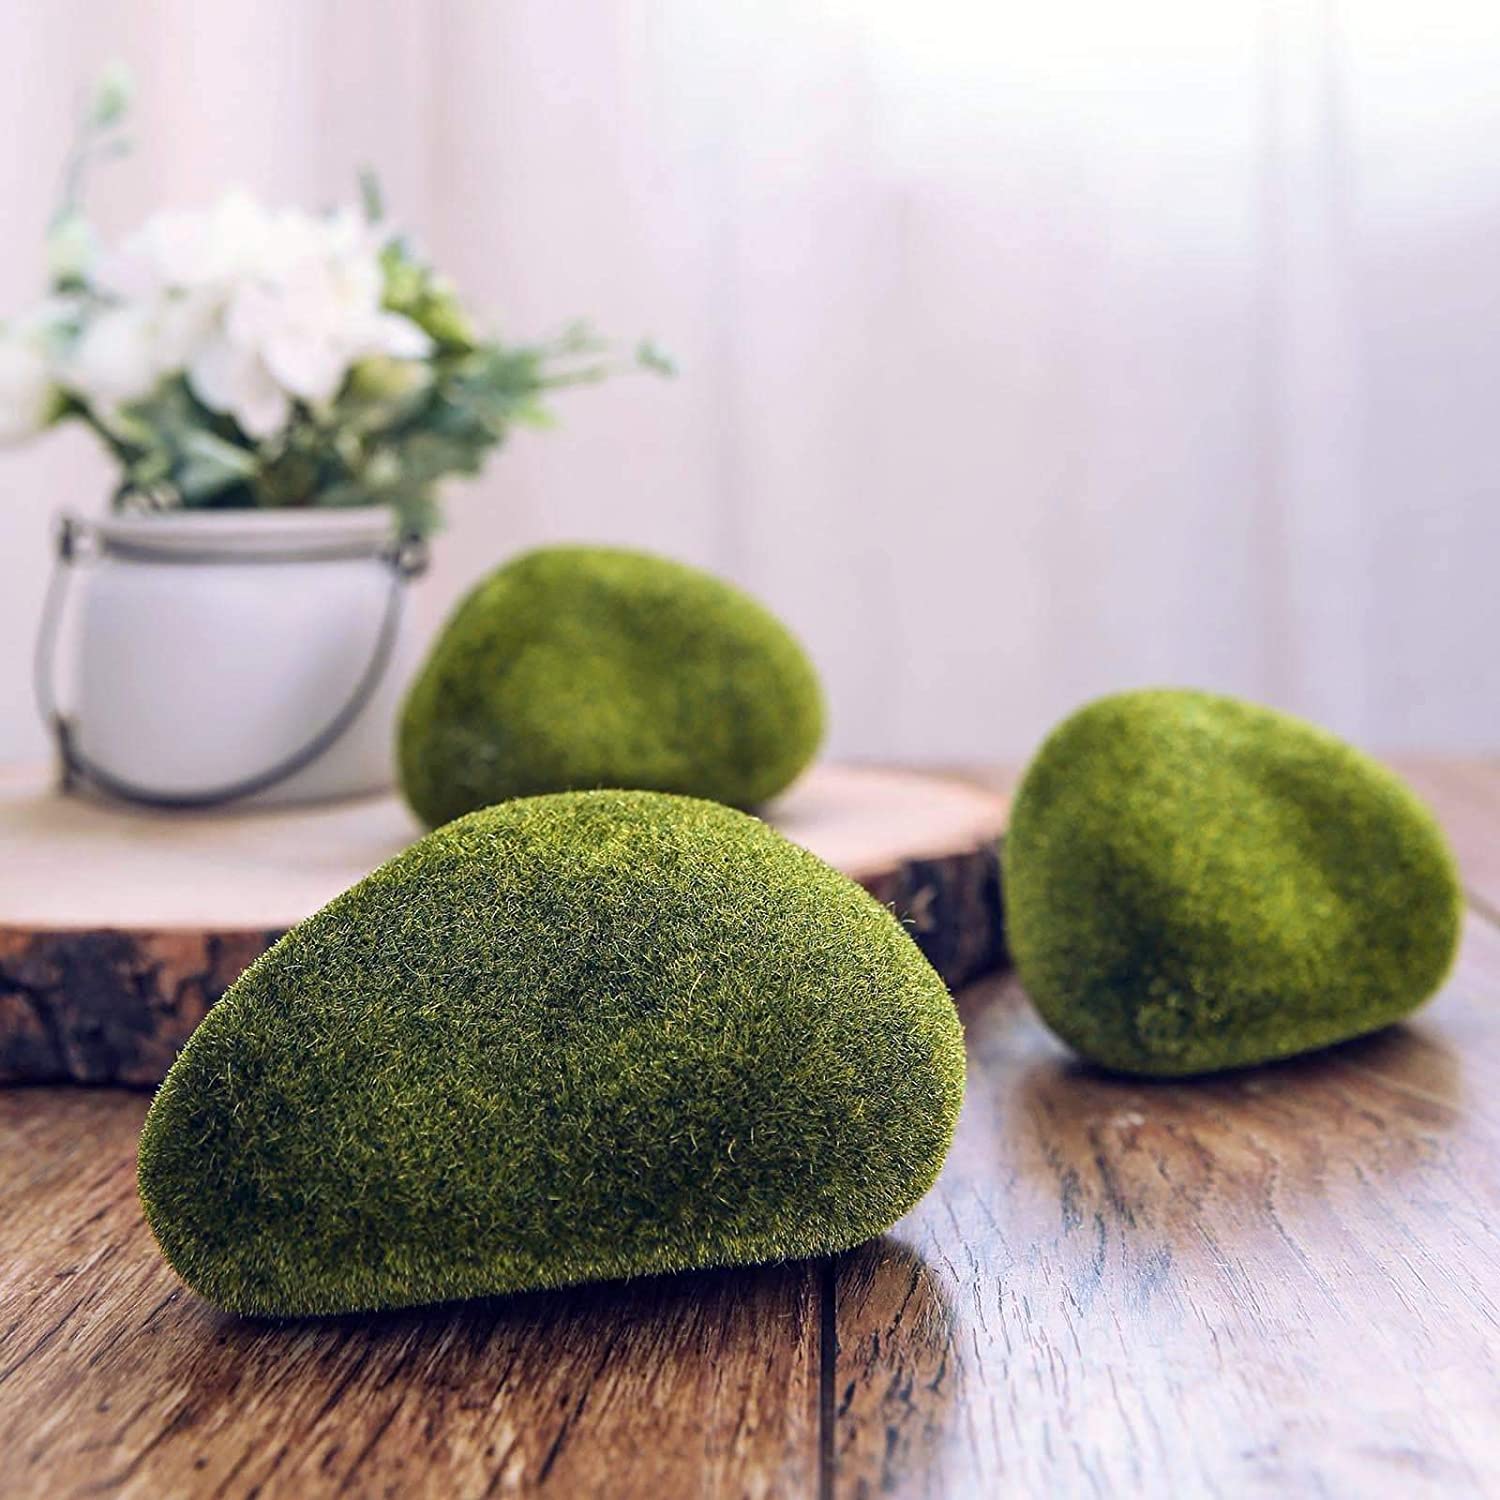 Hukimoyo Moss Balls Decorative Grass Ball for Home Decorations, Green Foam Artificial Plant Silk for Fairy Garden